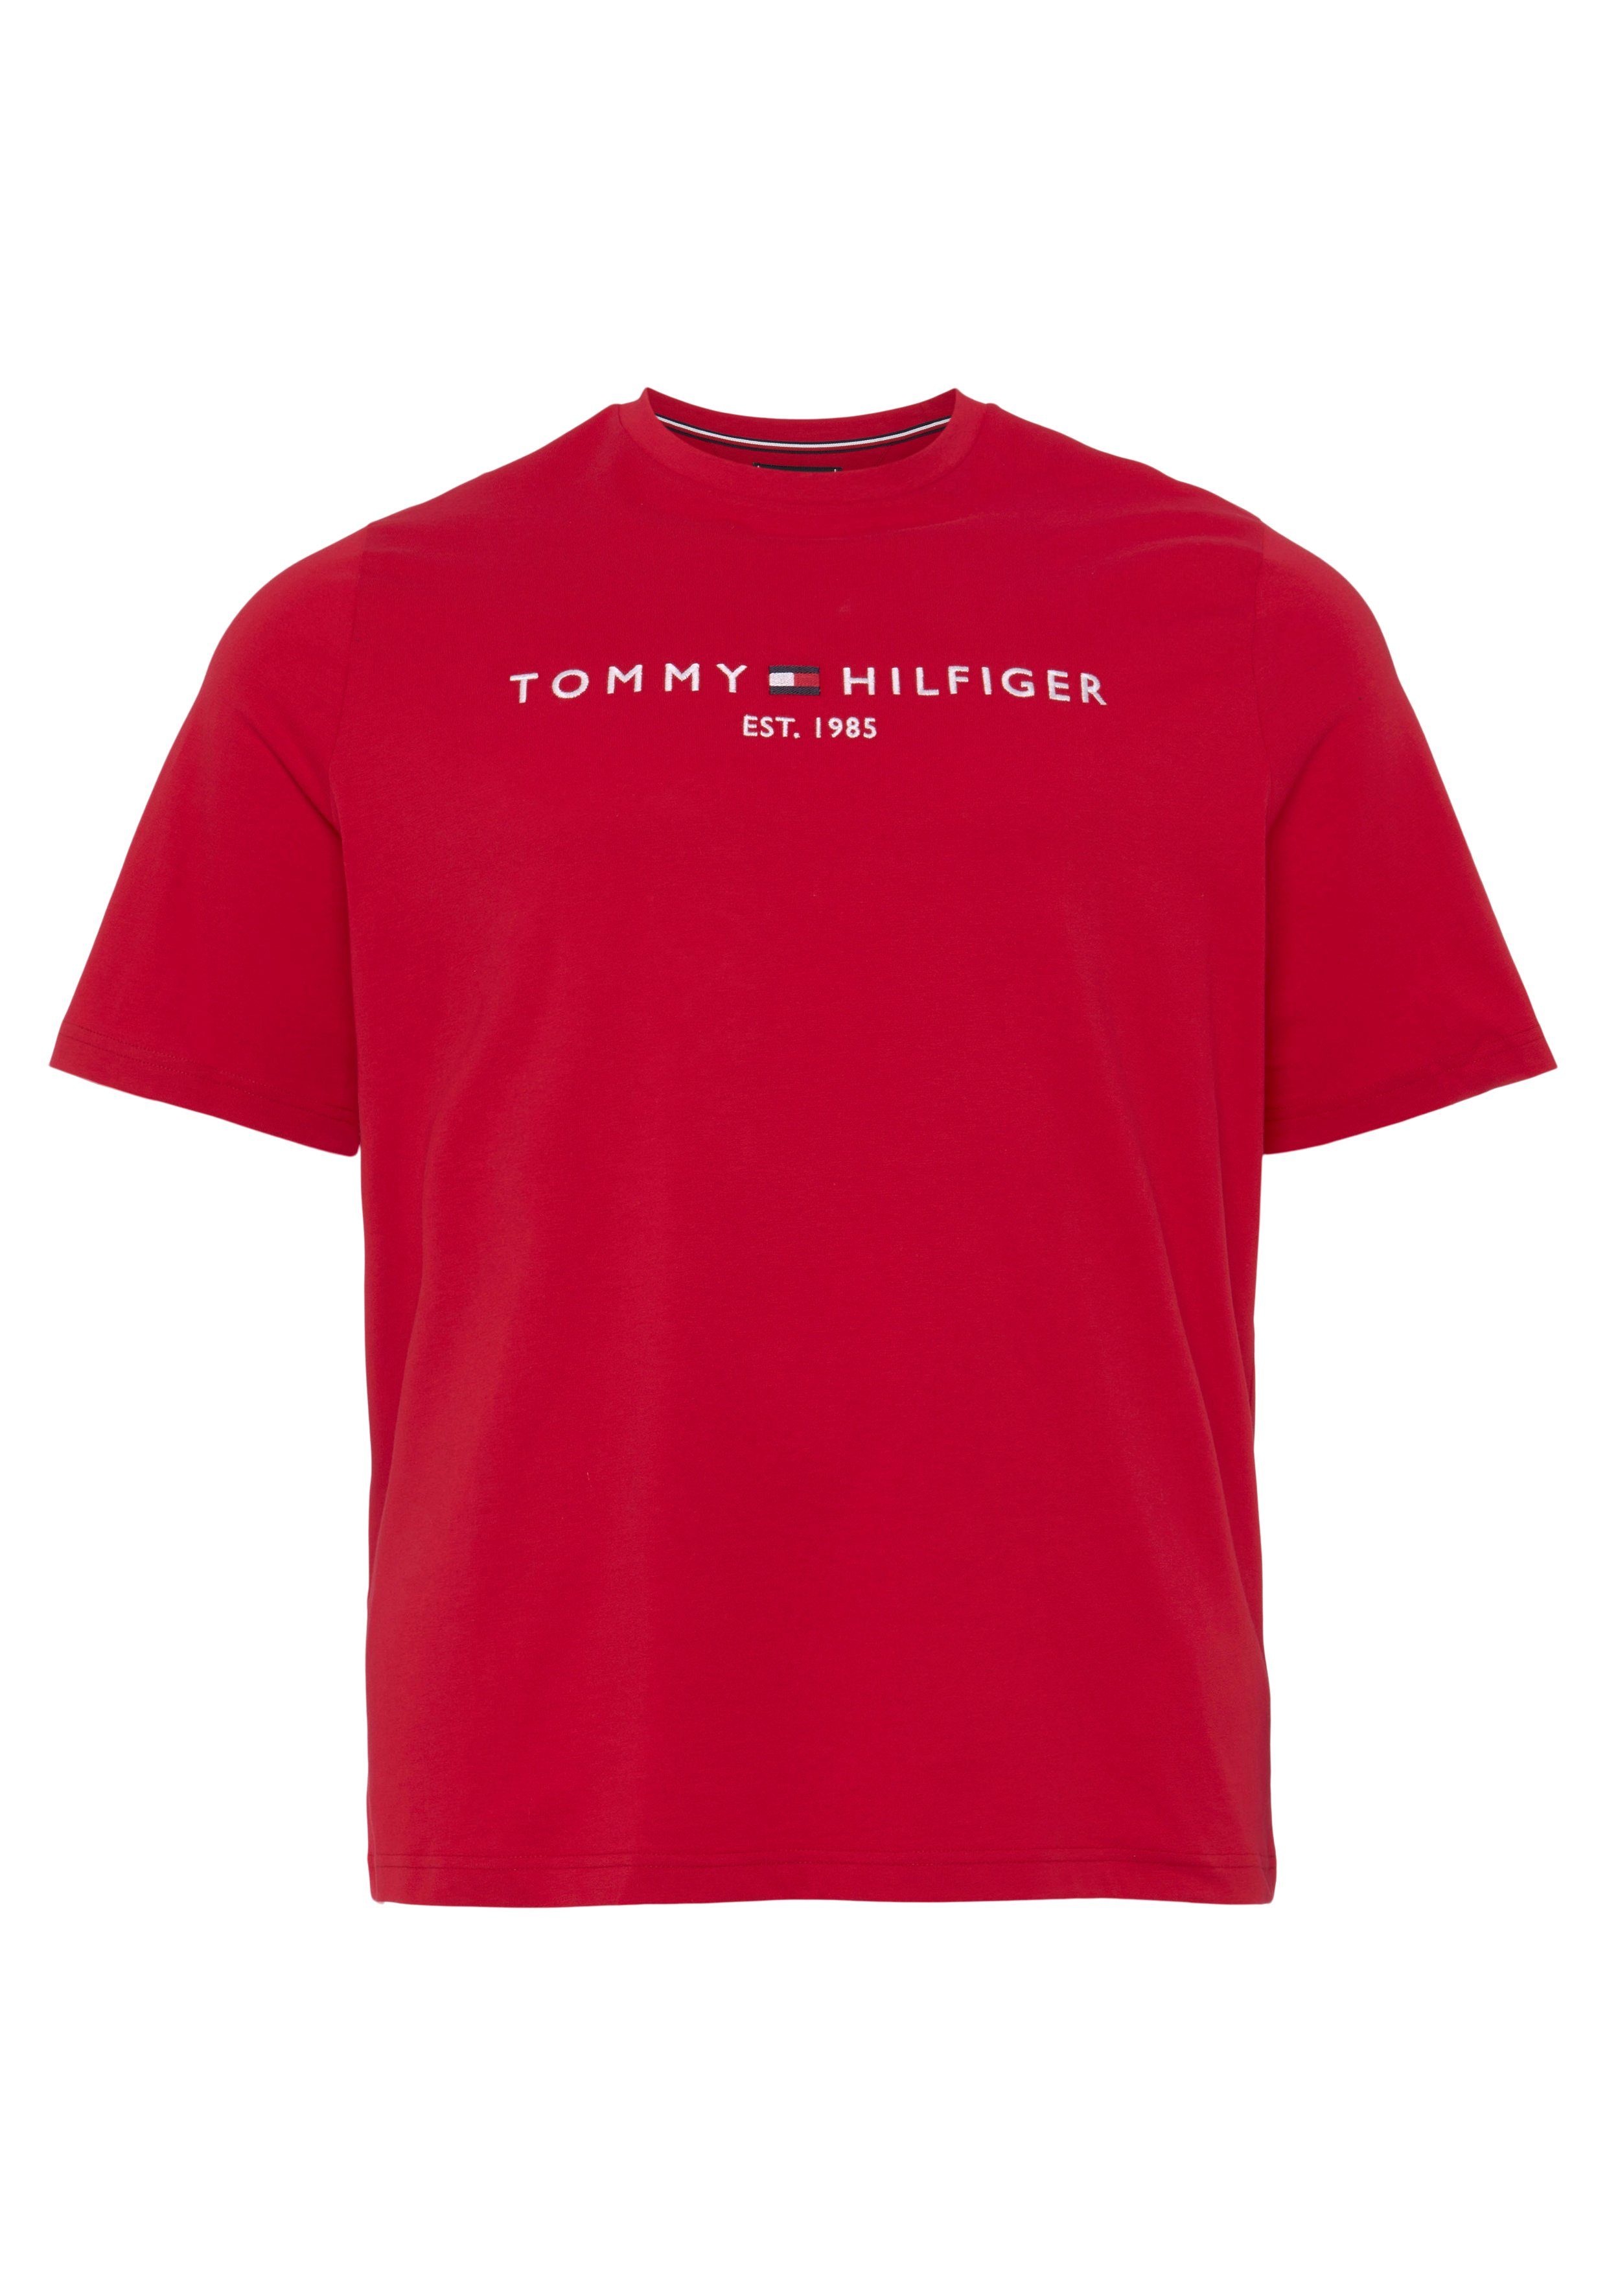 TEE-B Tall LOGO & Tommy Big Hilfiger T-Shirt Tommy mit Brust der auf BT-TOMMY Logoschriftzug rot Hilfiger